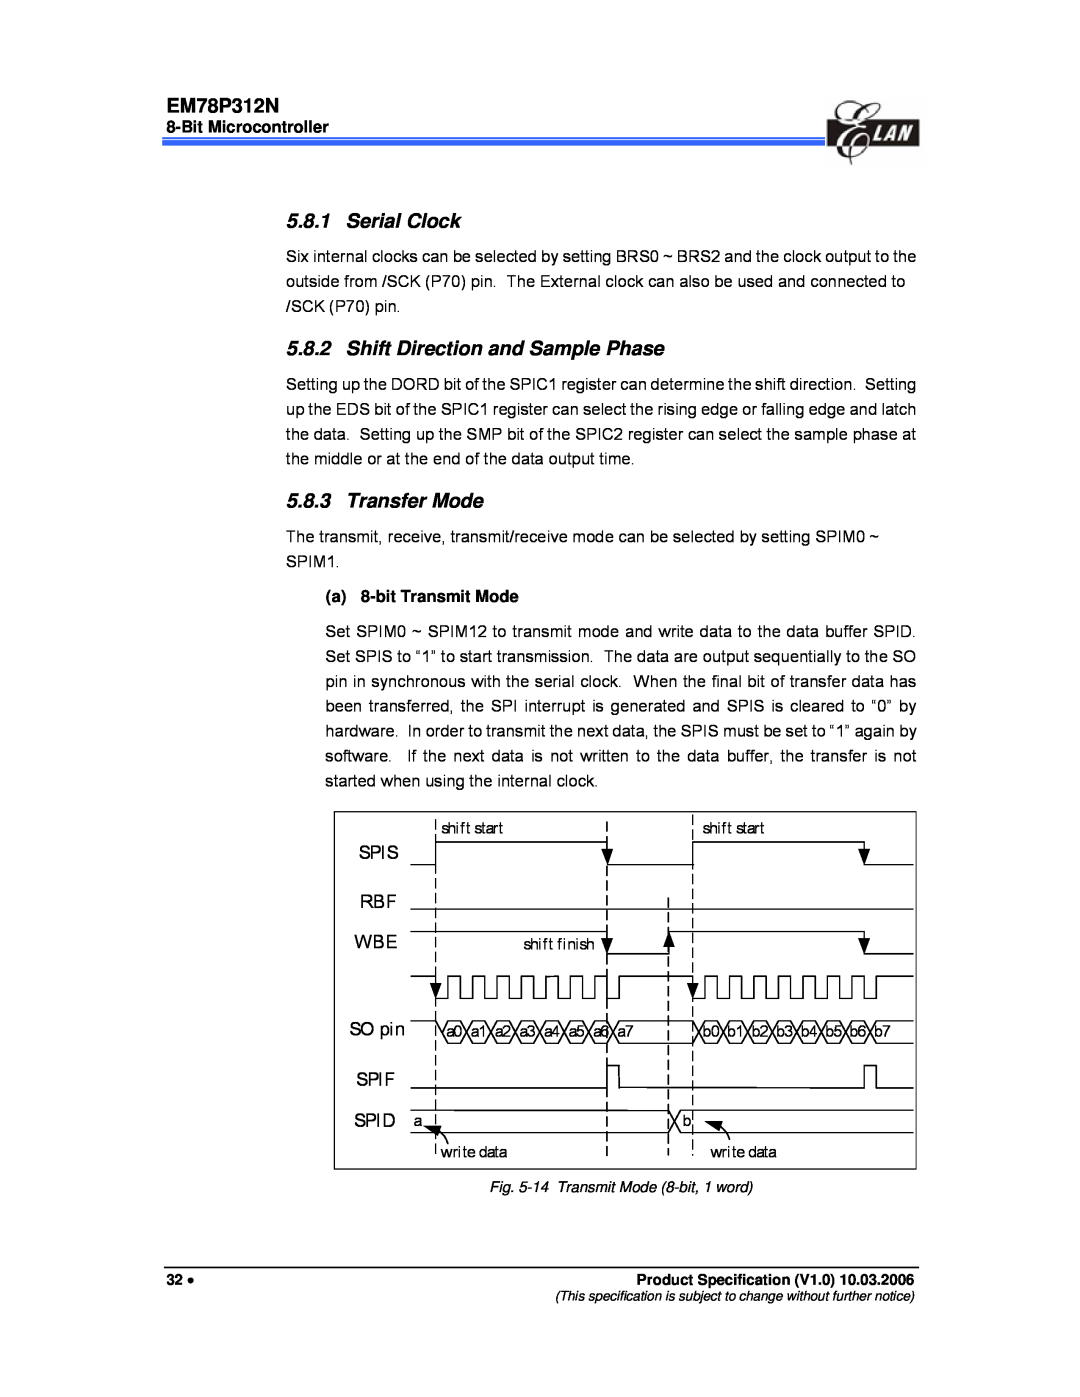 IBM EM78P312N manual Serial Clock, Shift Direction and Sample Phase, Transfer Mode, Spis, Spif, Spid, Bit Microcontroller 